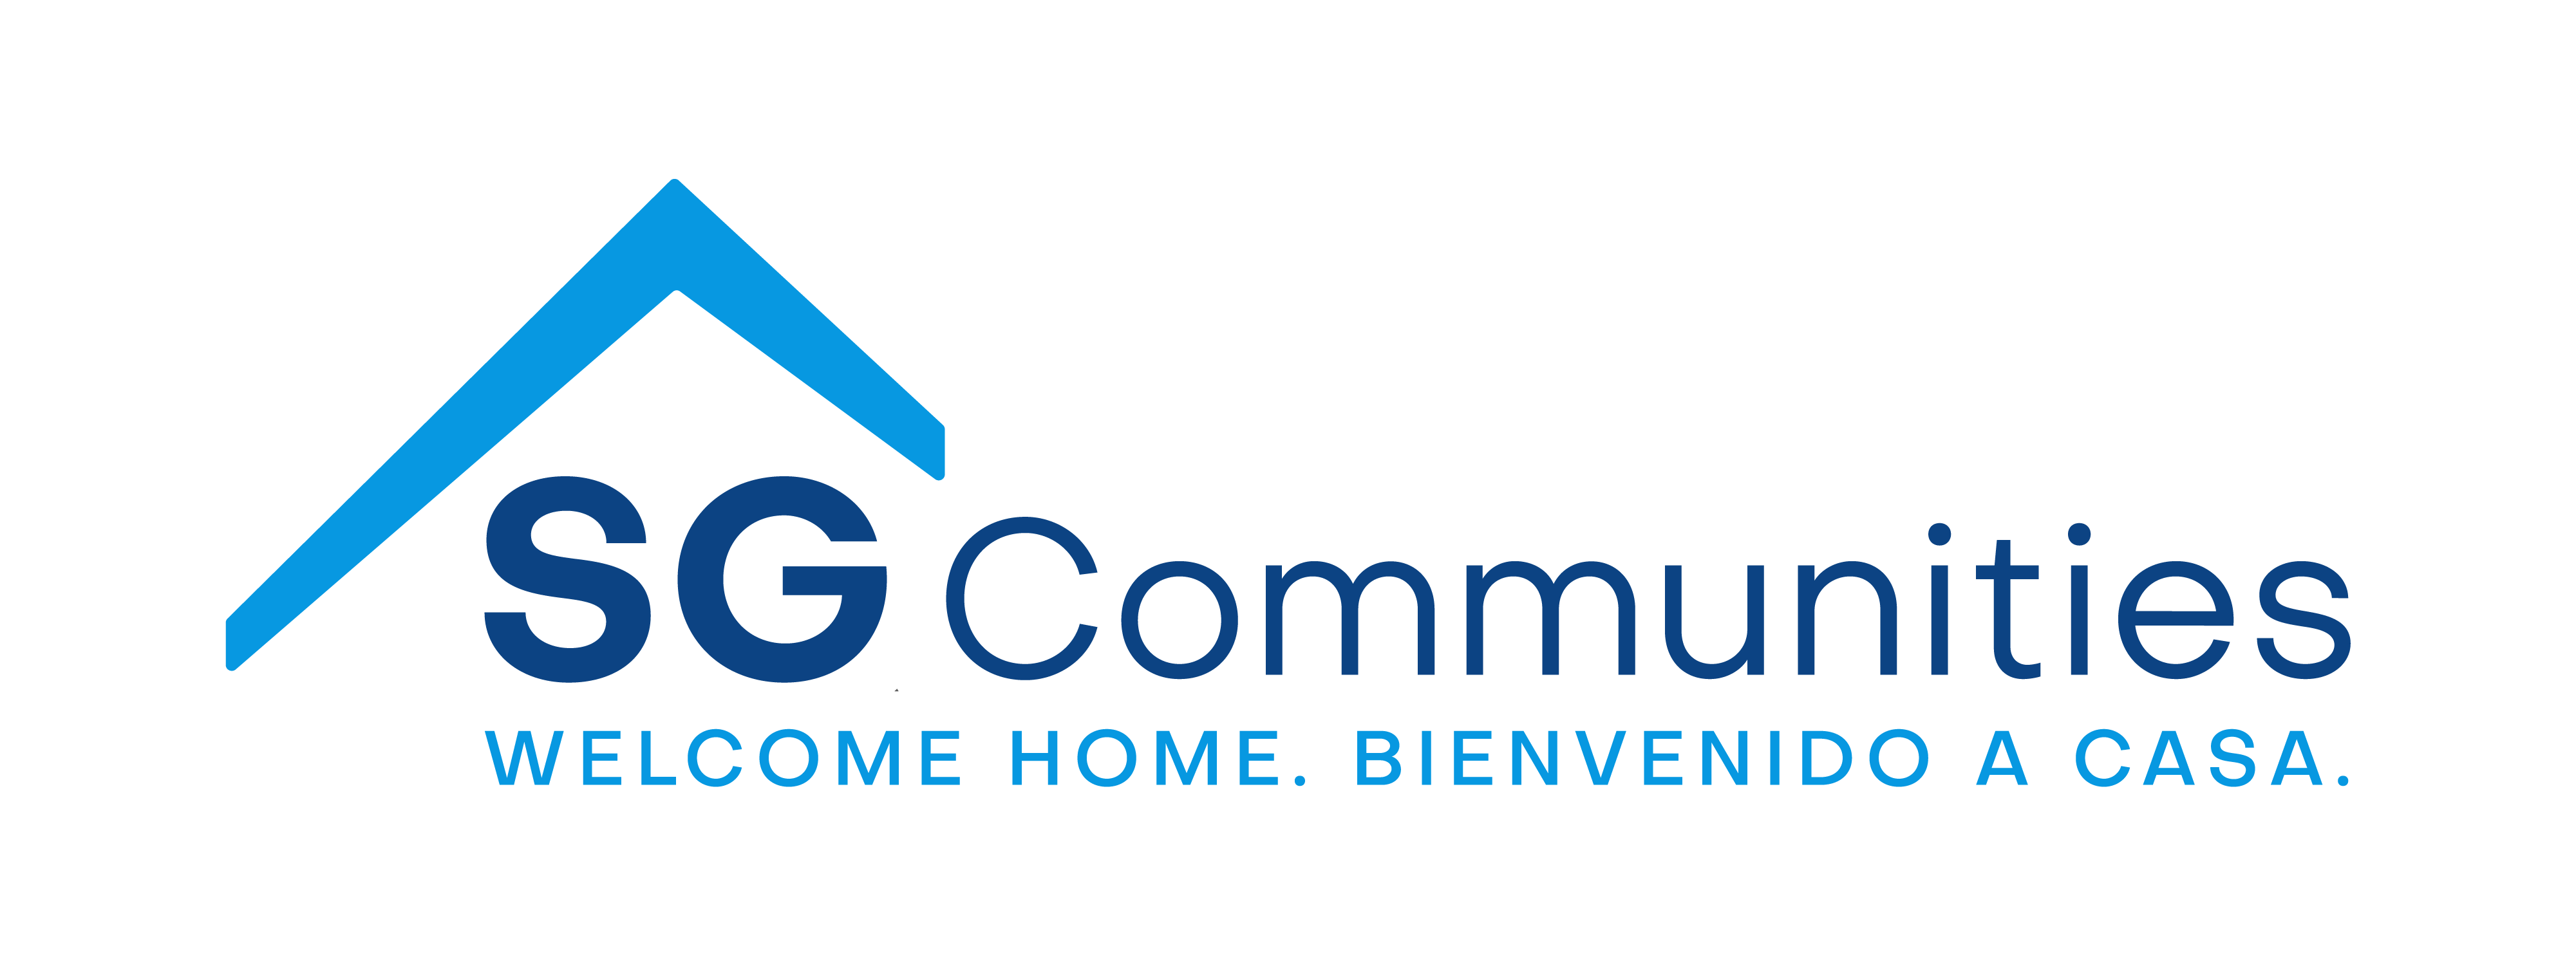 SGCommunities_Full-Horizontal_Color_BG-None-01